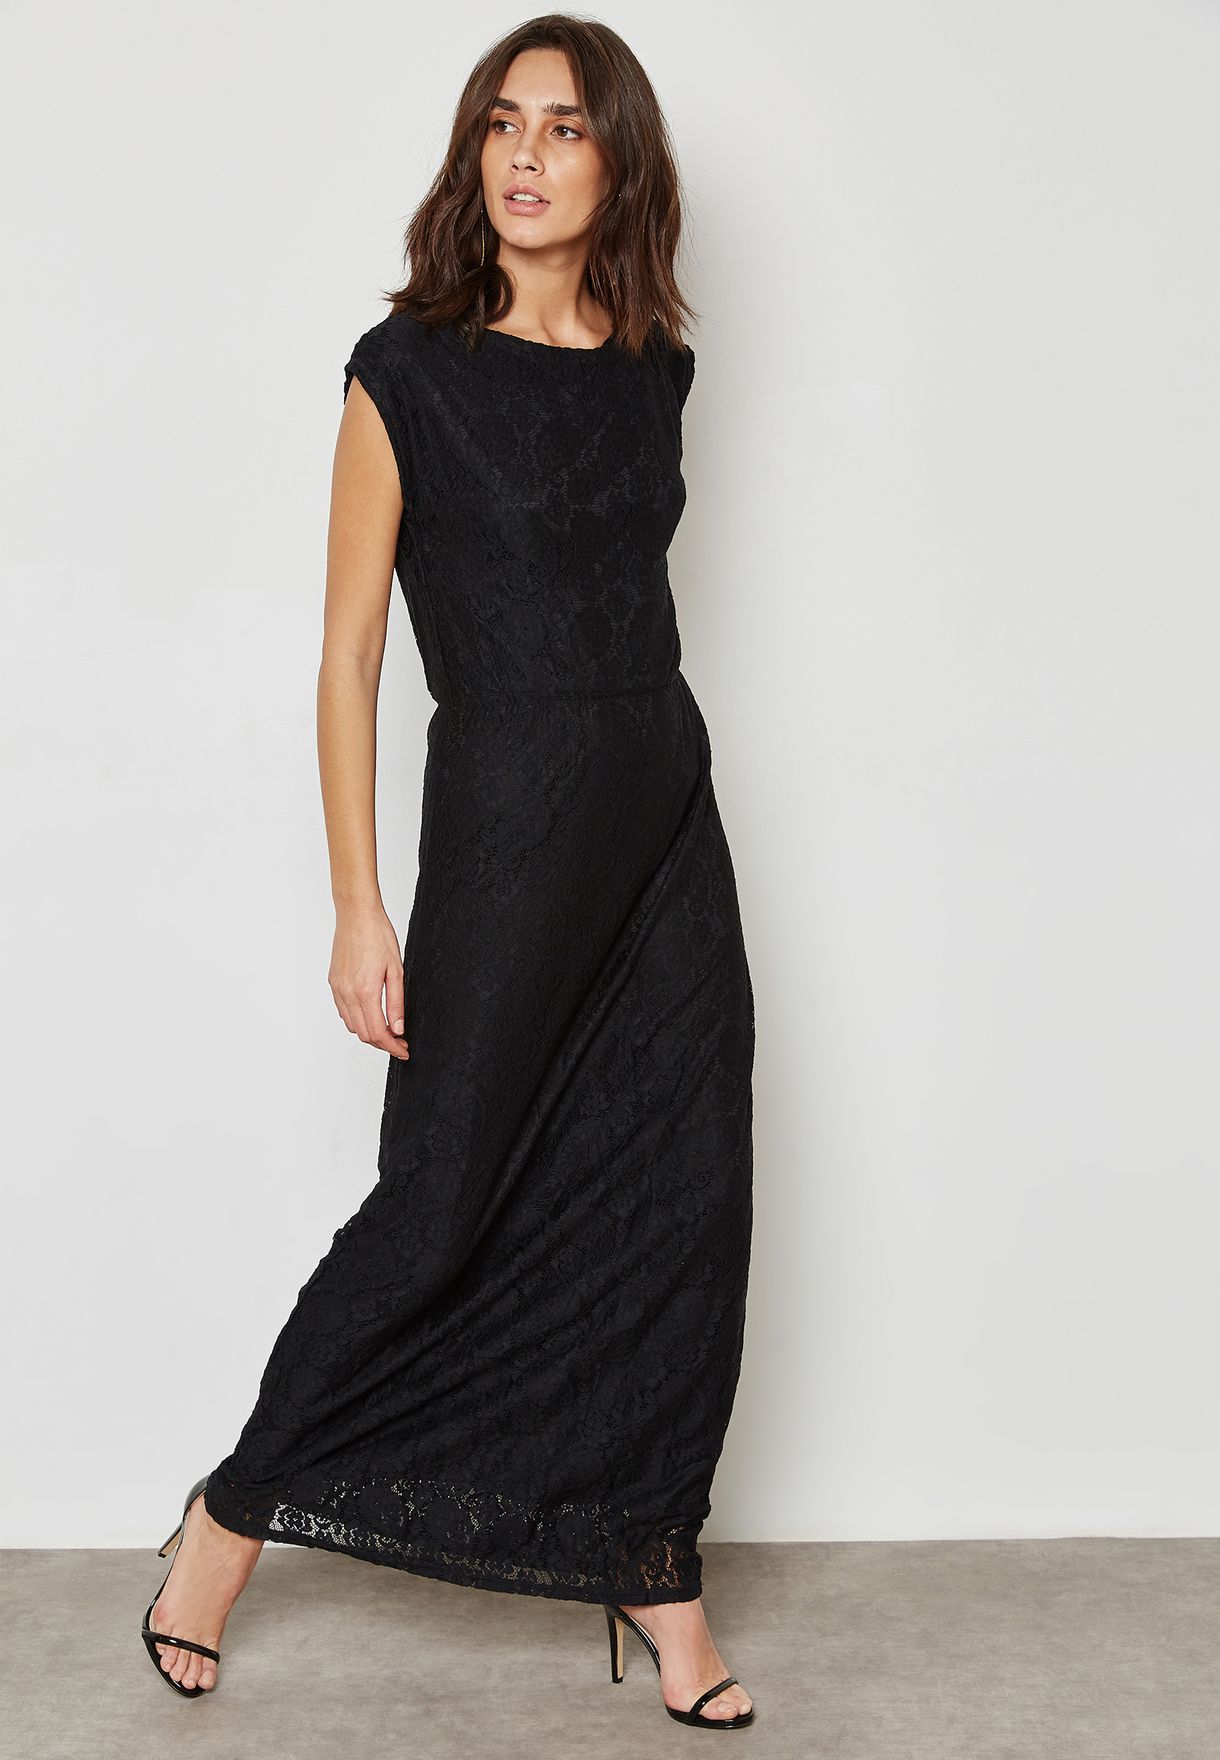 mela london black lace dress